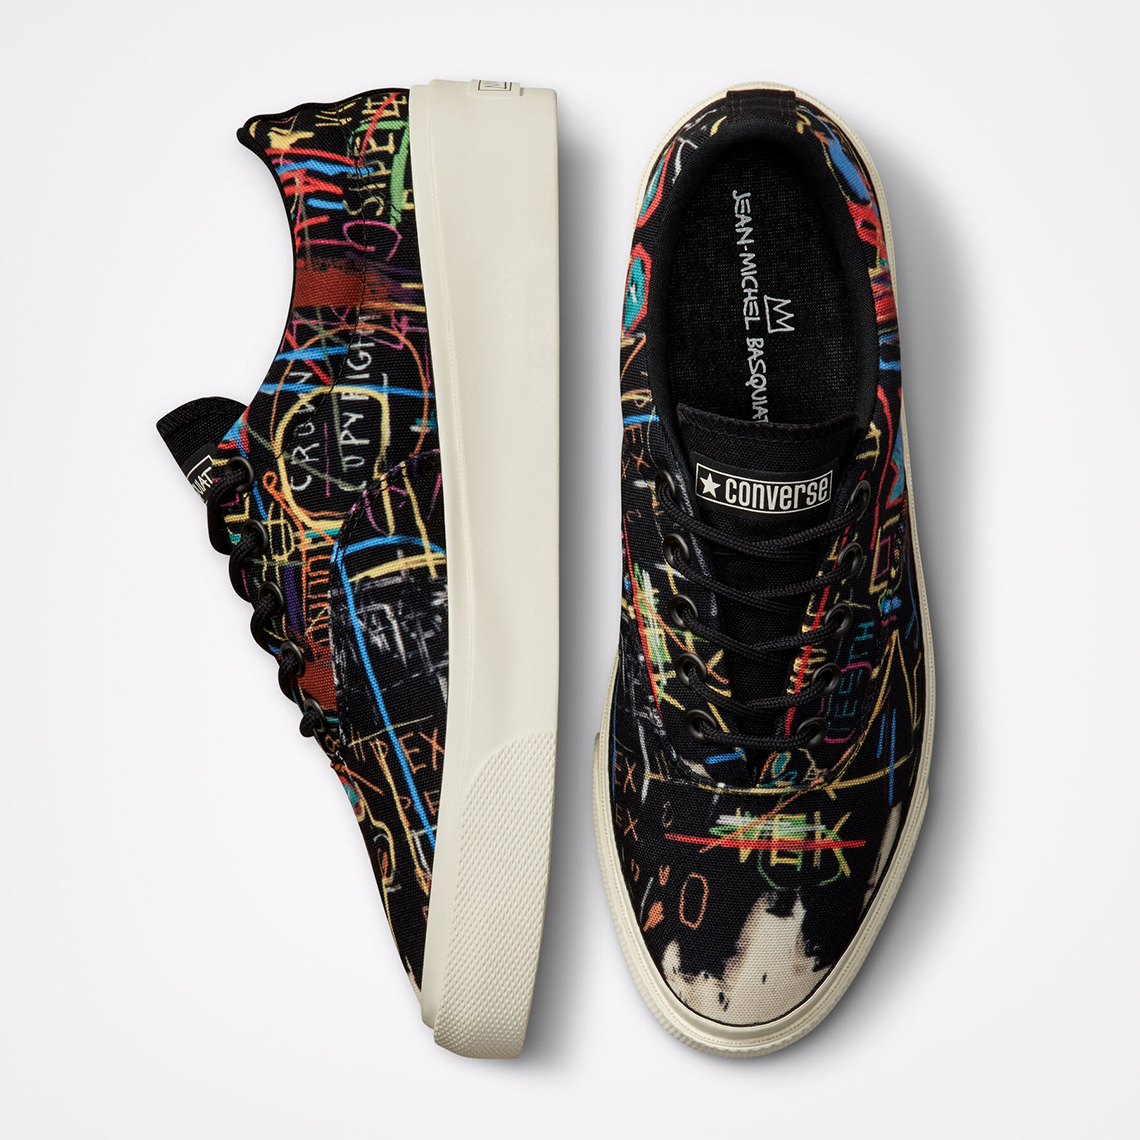 Basquiat Converse Skidgrip 172584c Release Date 2